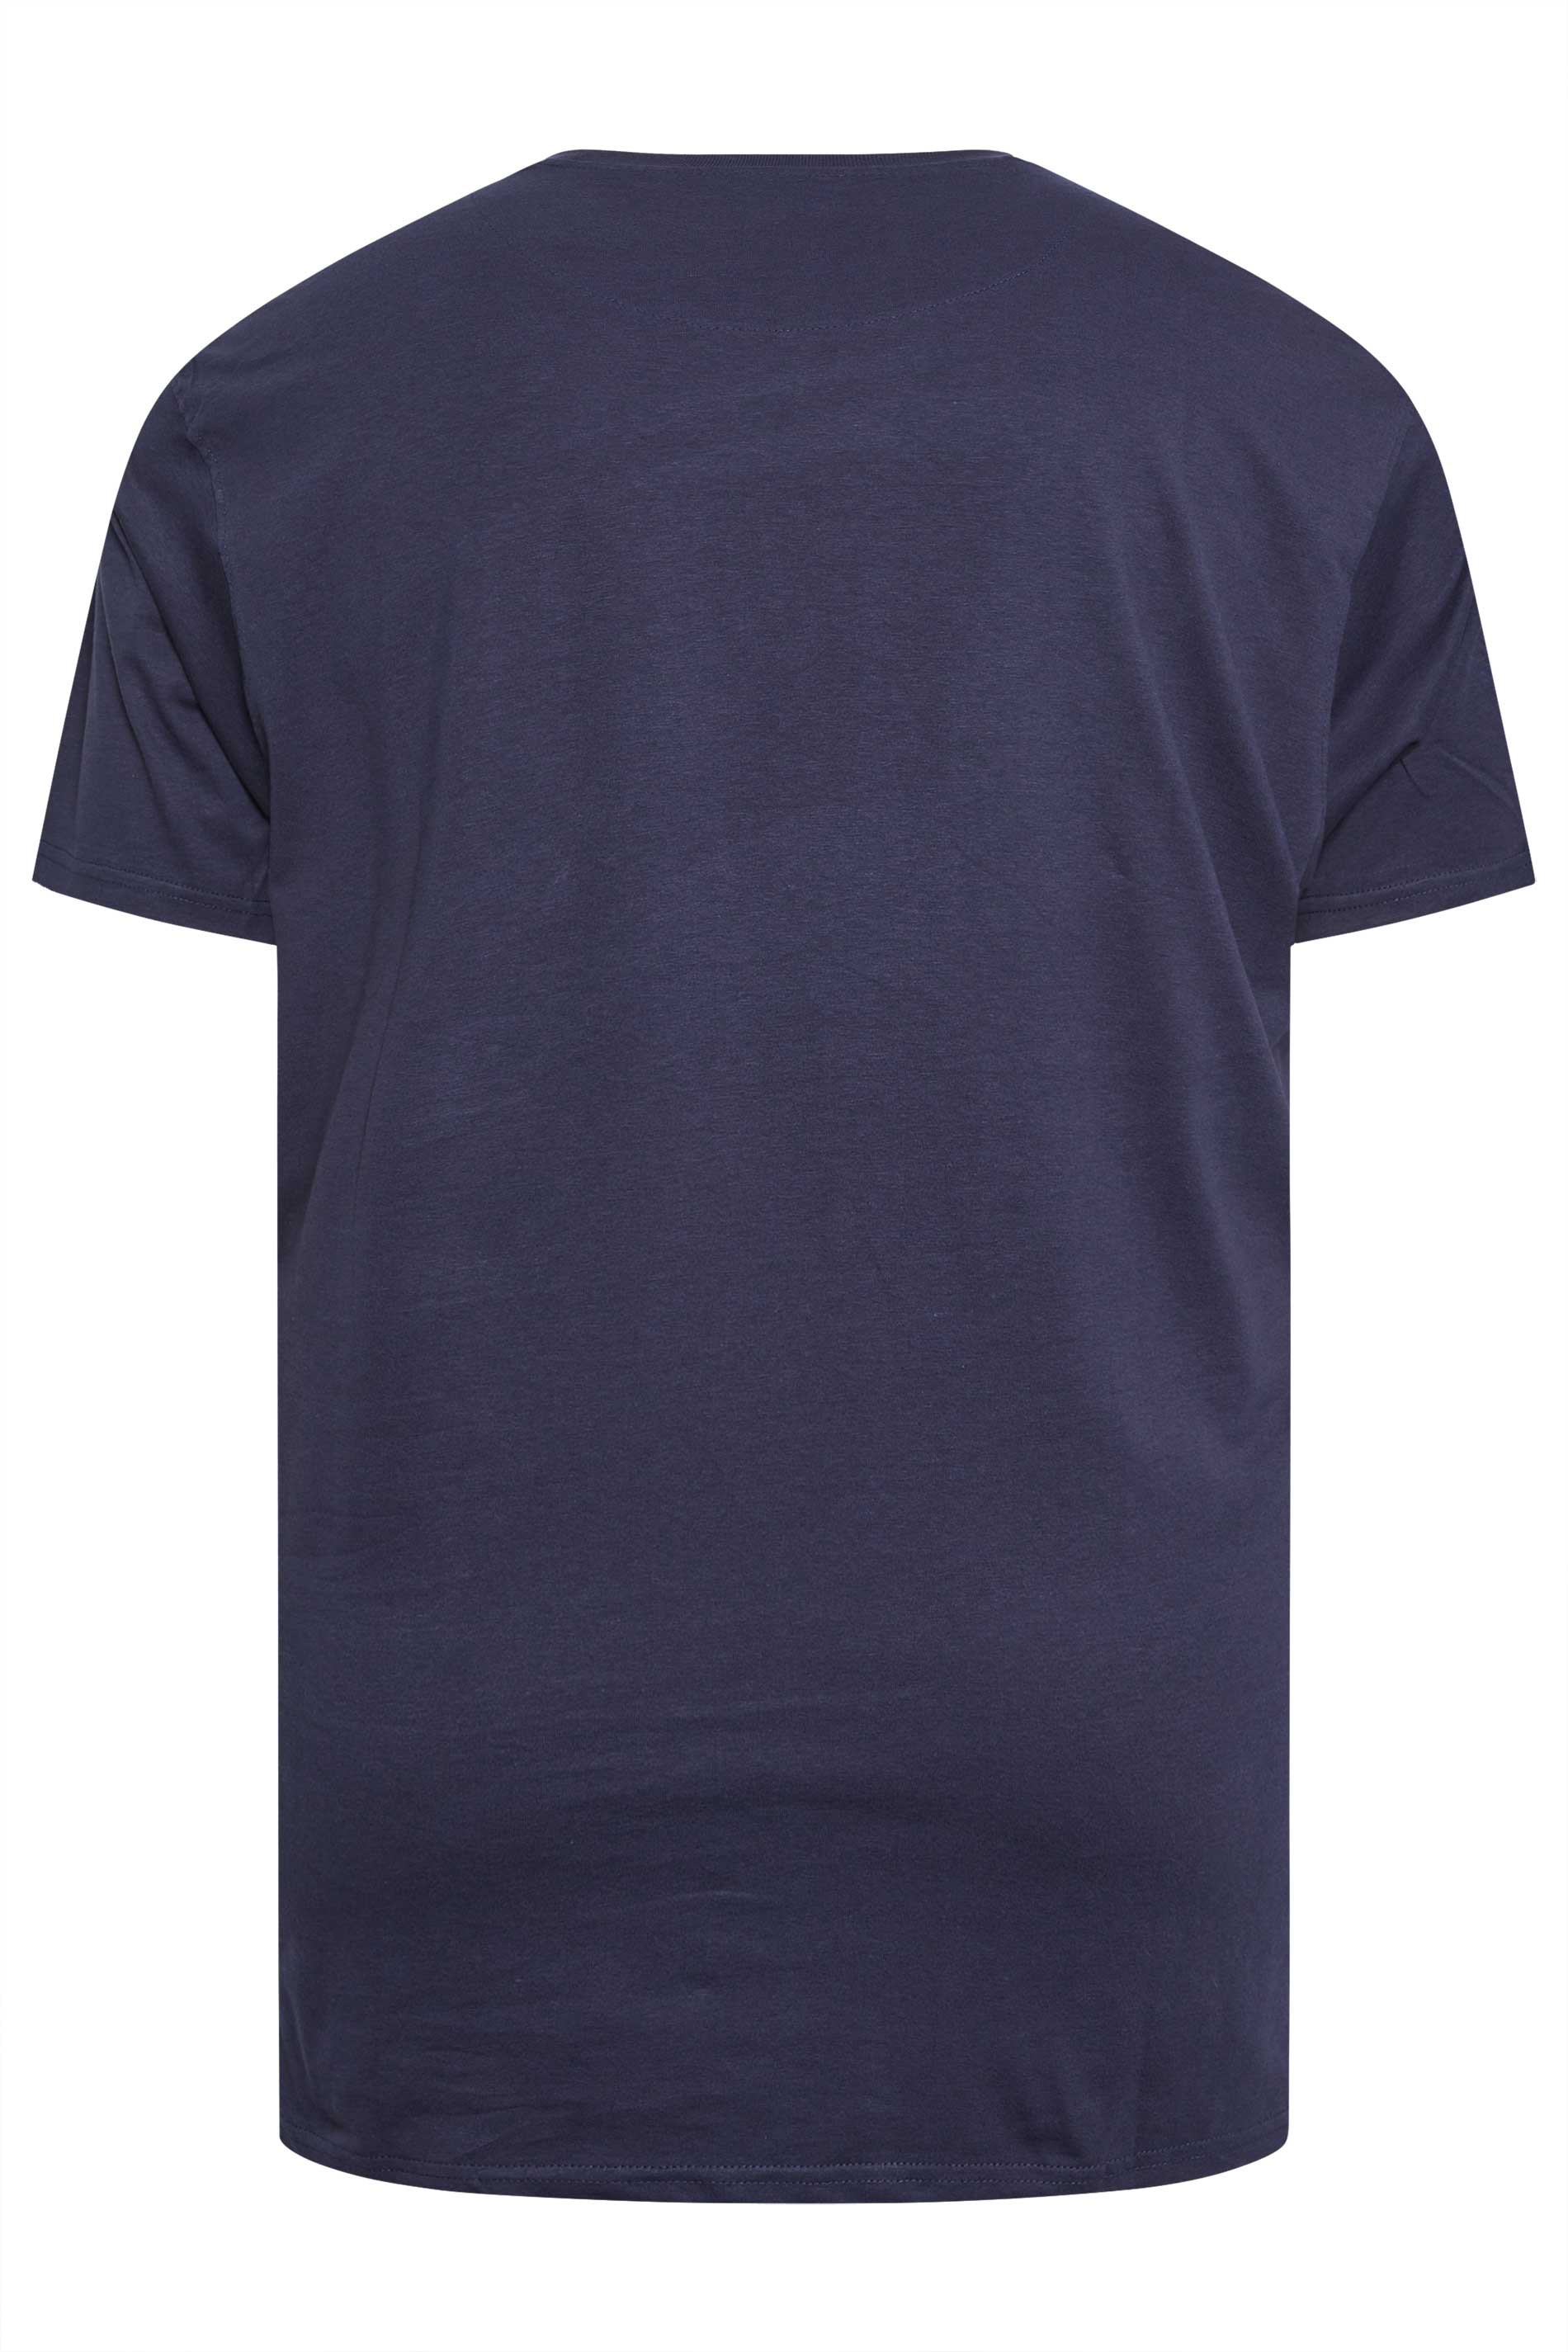 KAM Big & Tall Blue & Black 2 Pack Slogan Printed T-Shirts | BadRhino